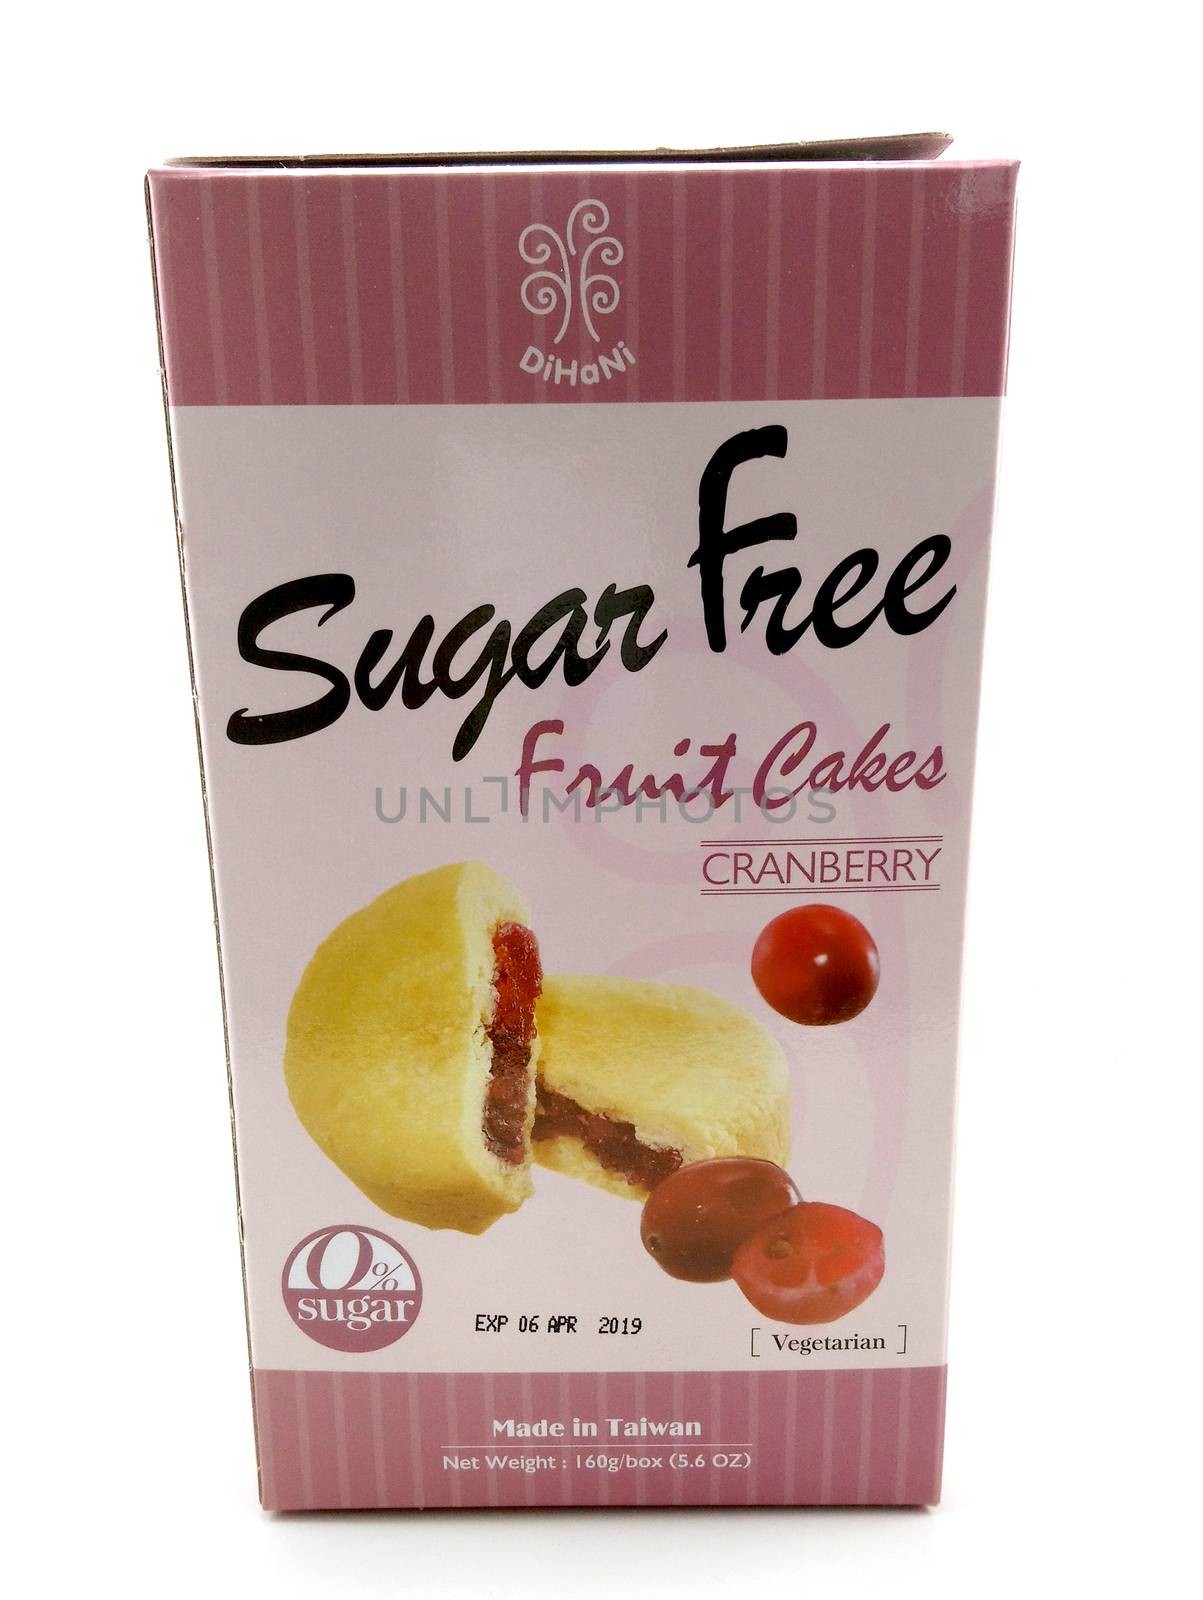 Dihani sugar free fruit cakes cranberry in Manila, Philippines by imwaltersy